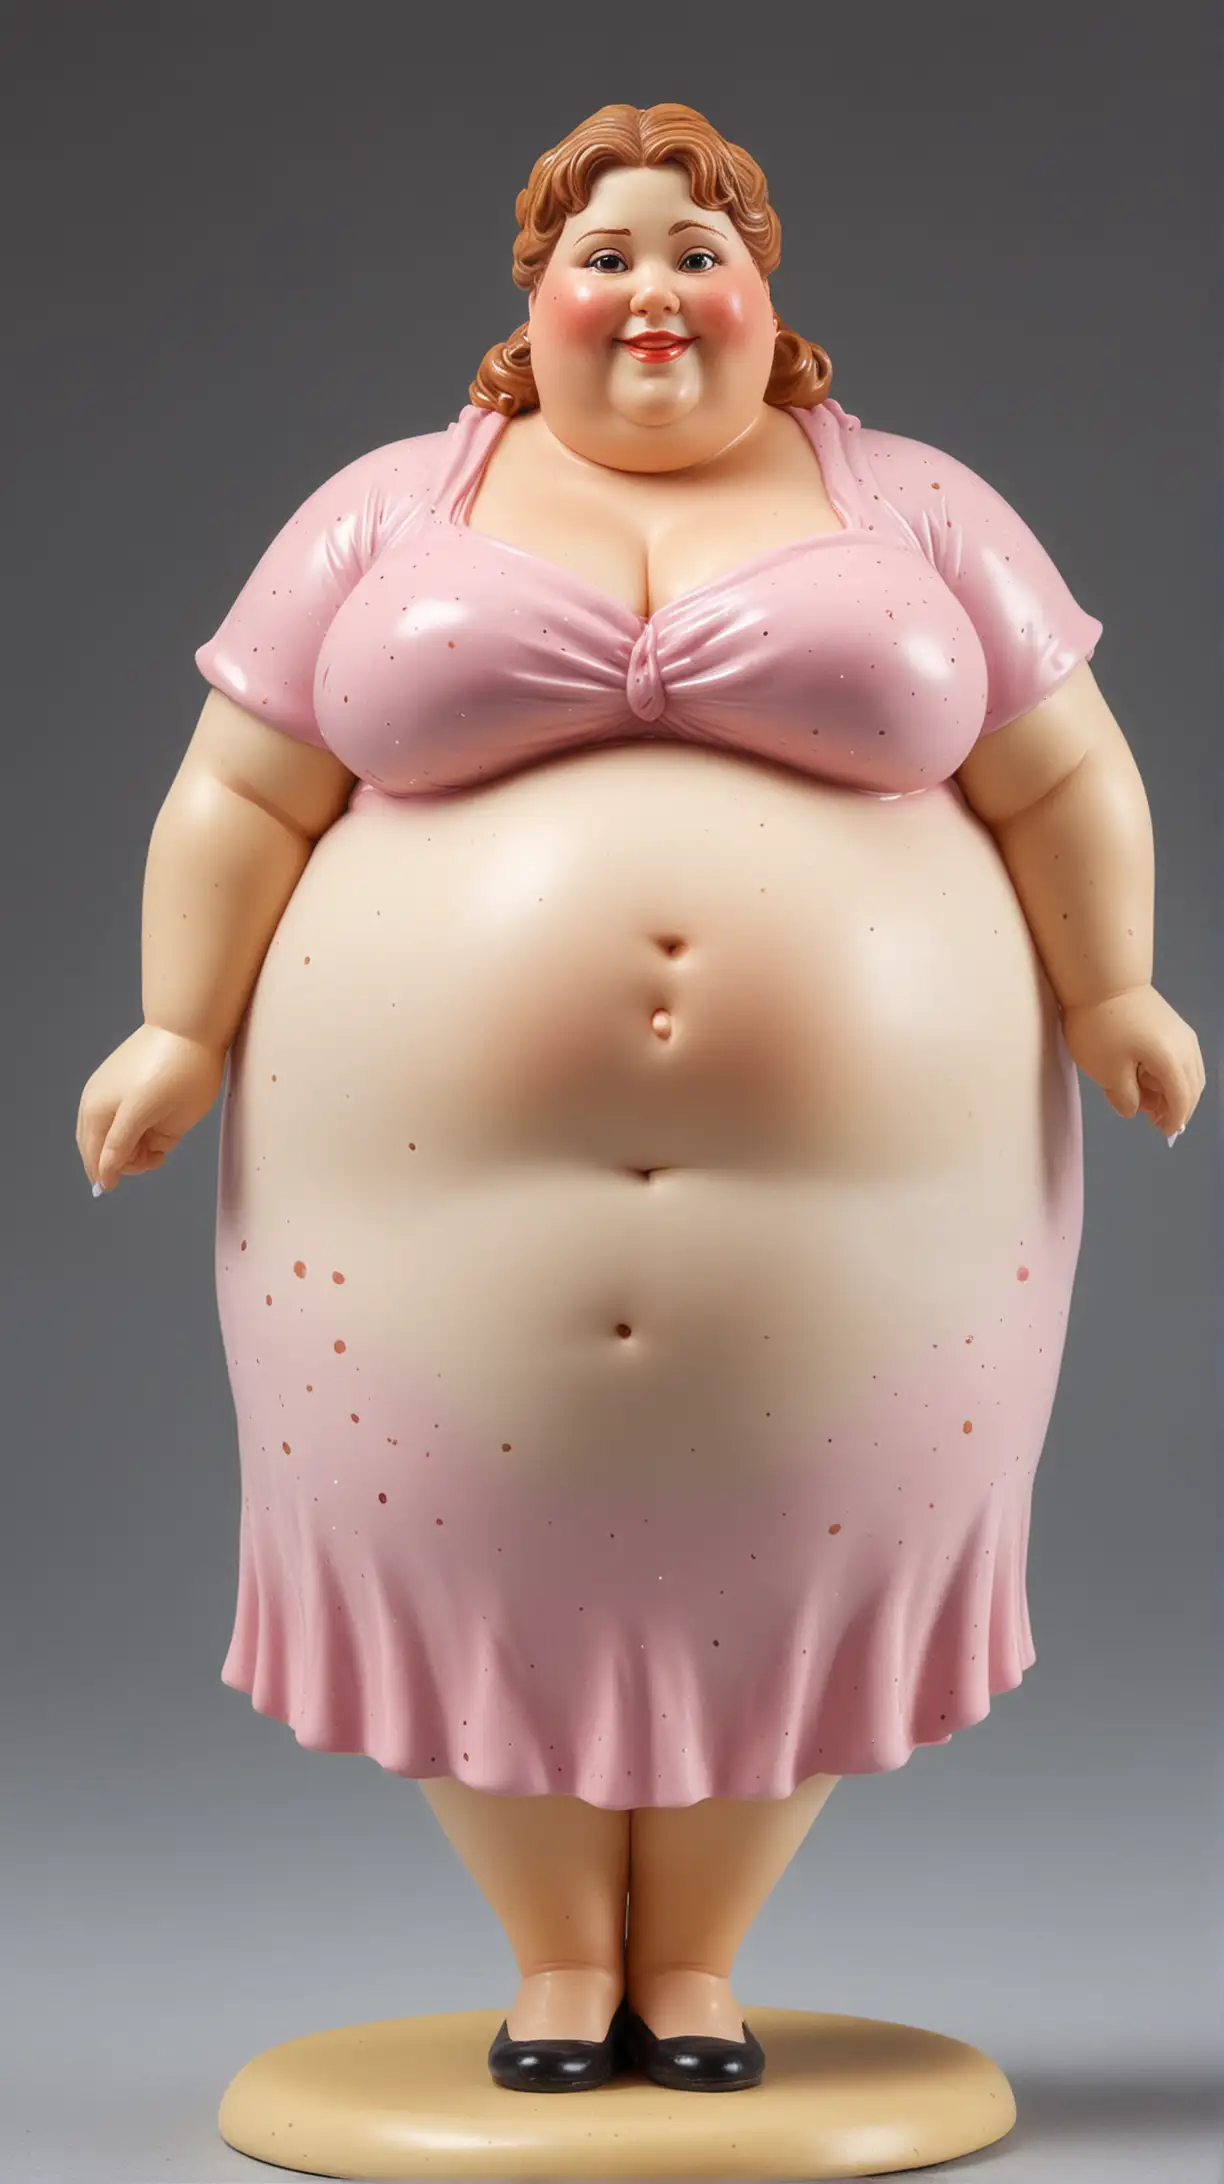 A funny fatty lady figure 
